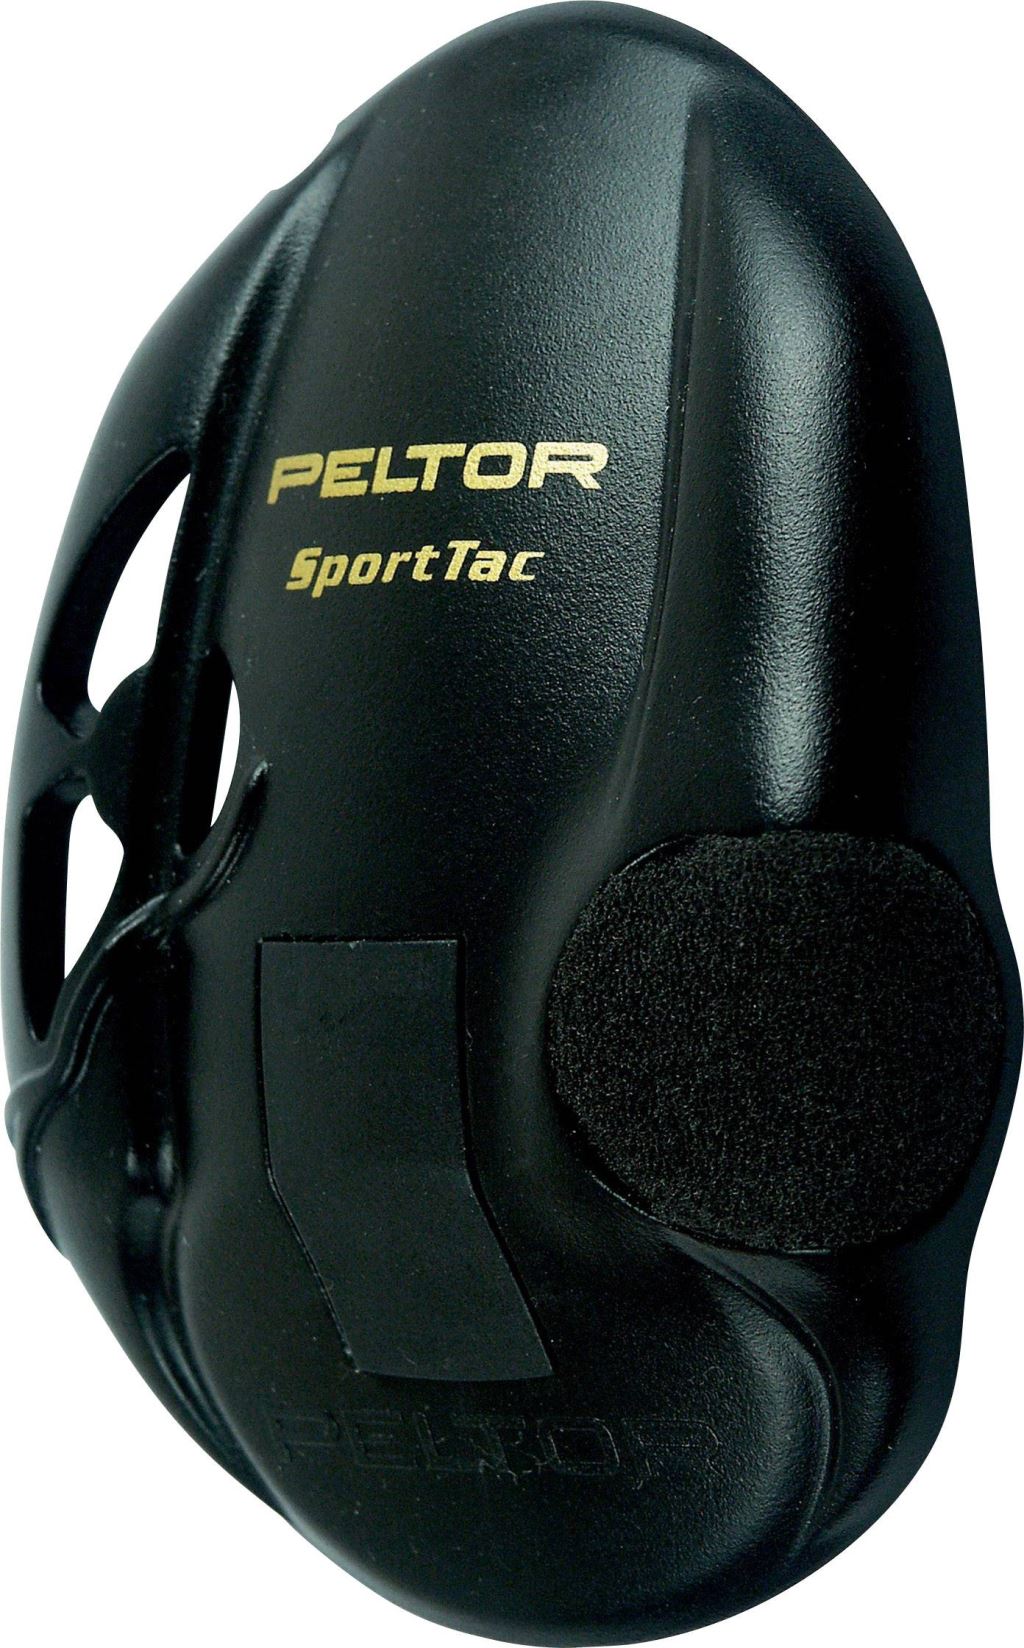 3M Peltor SportTac 210100-478-SV tartalék borítás, 26 dB